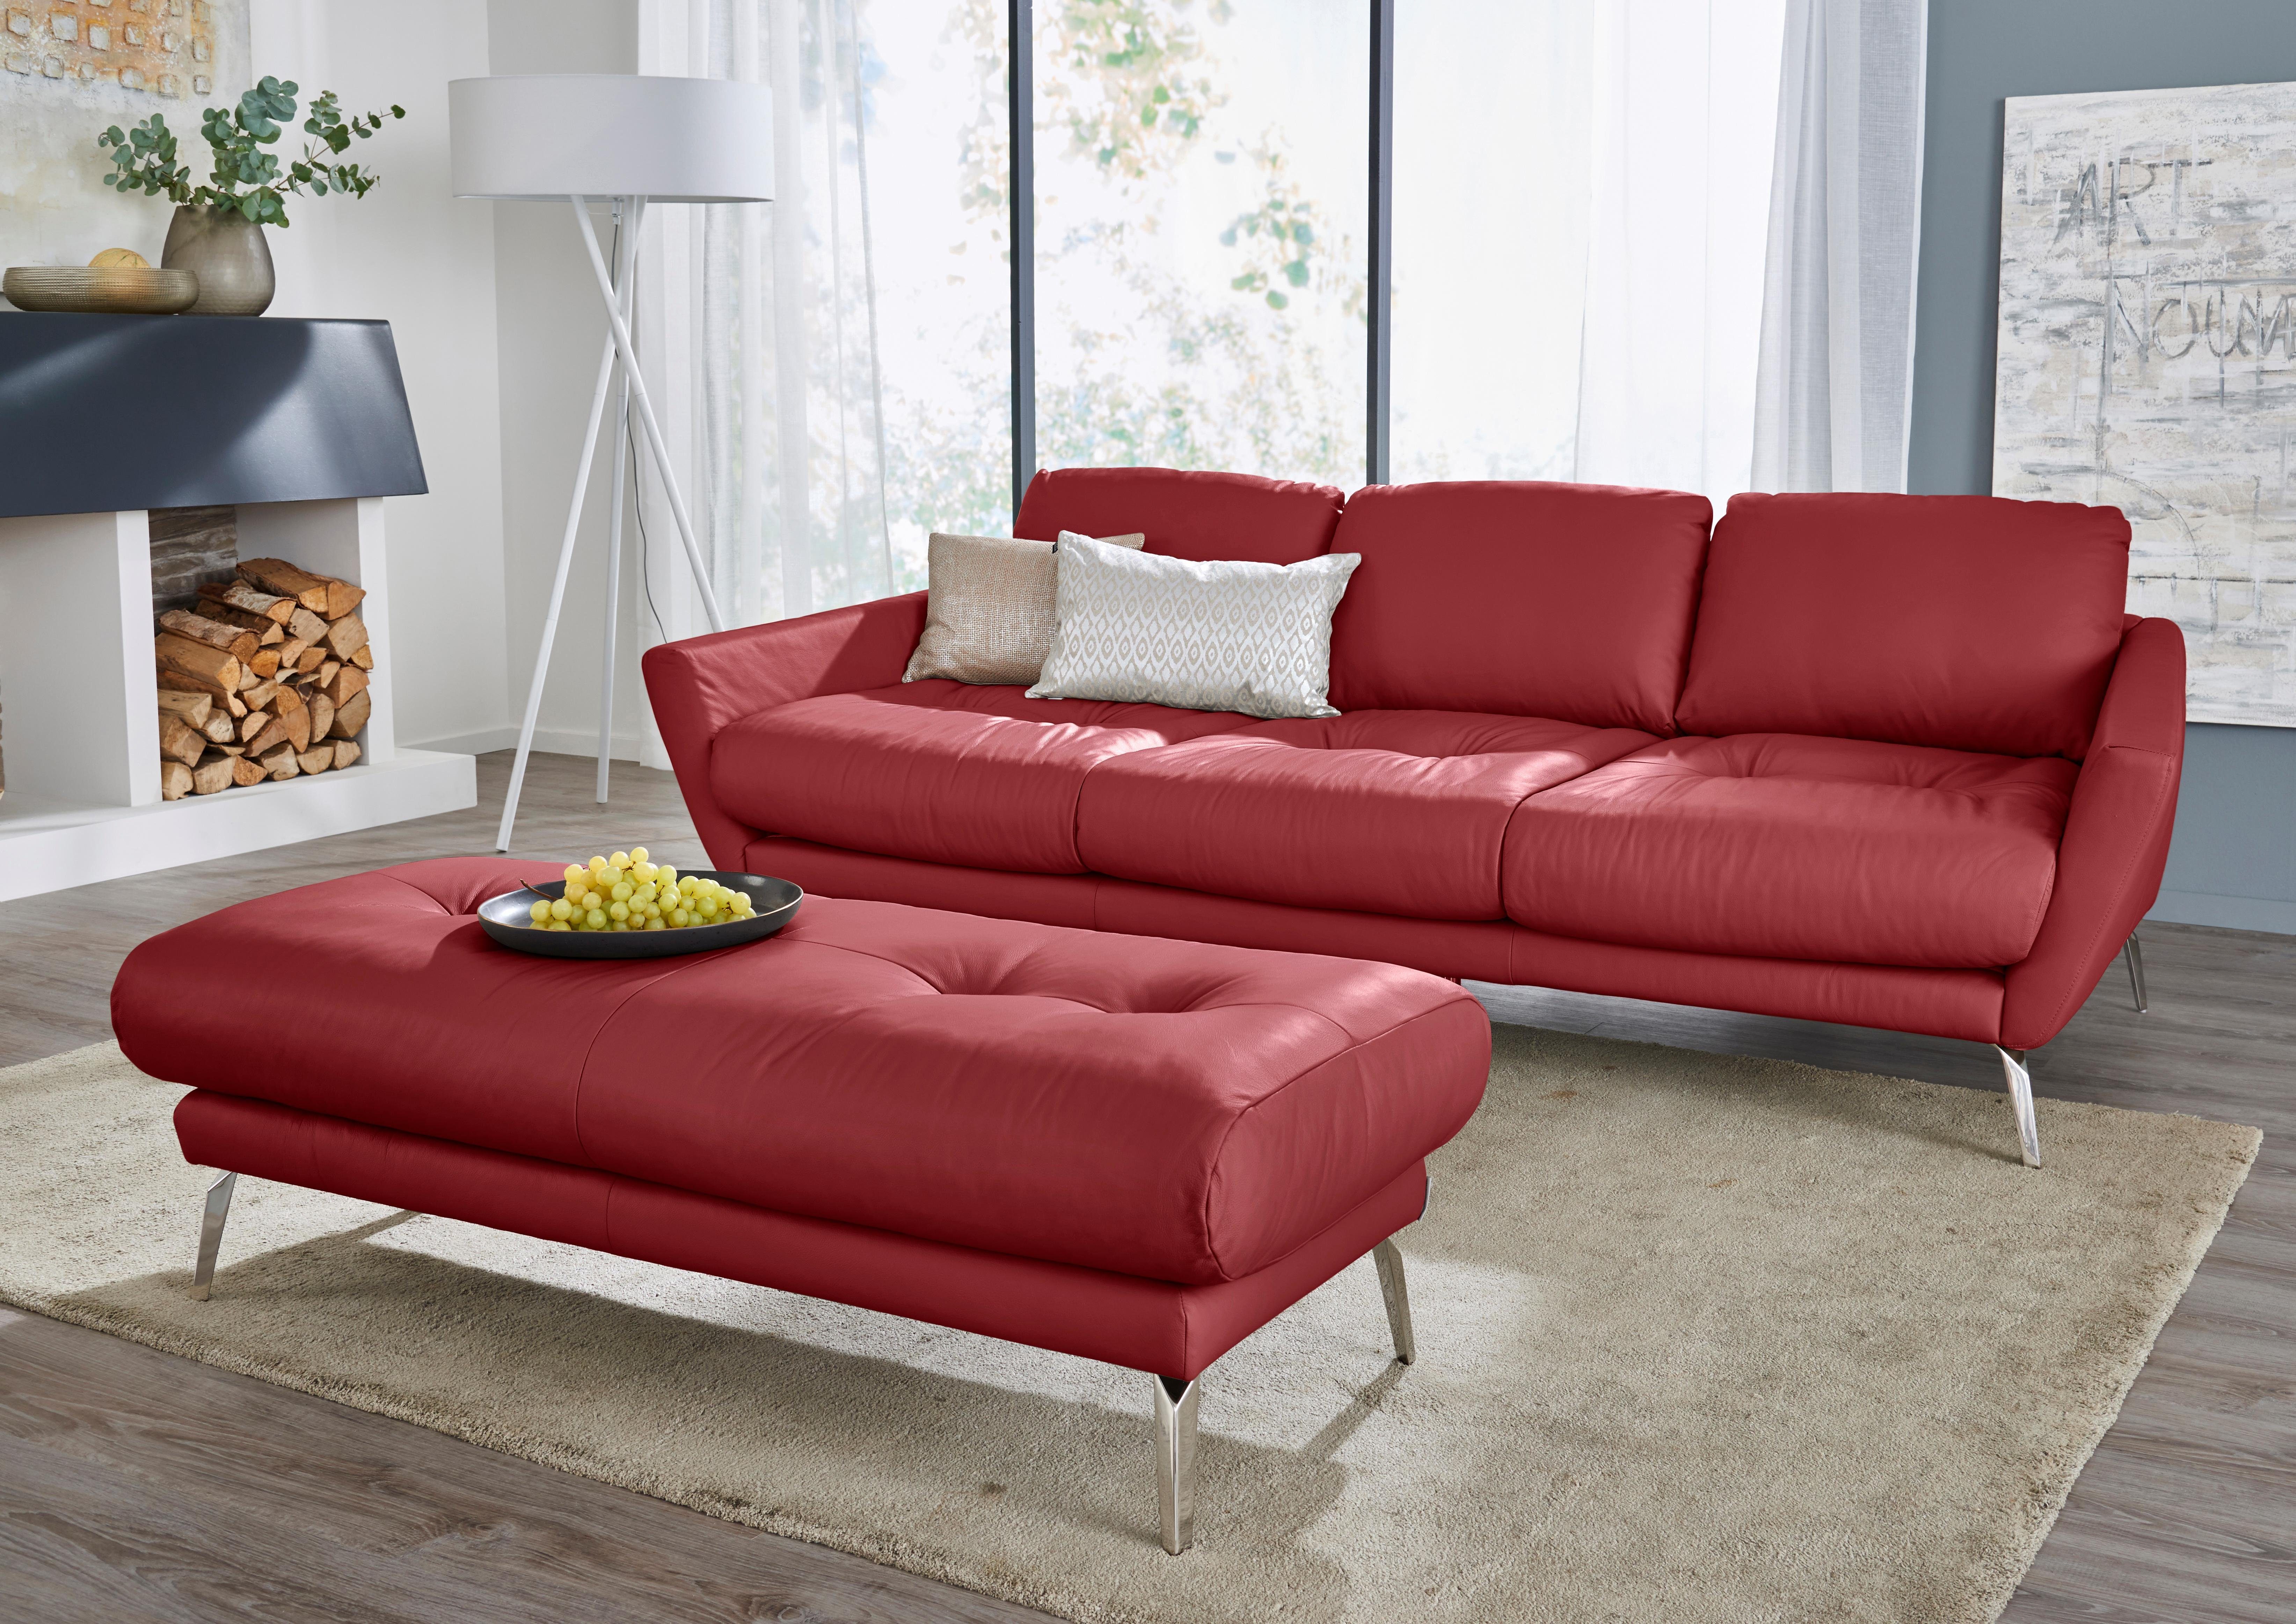 Füße Sitz, Big-Sofa glänzend im dekorativer W.SCHILLIG Heftung softy, Chrom mit